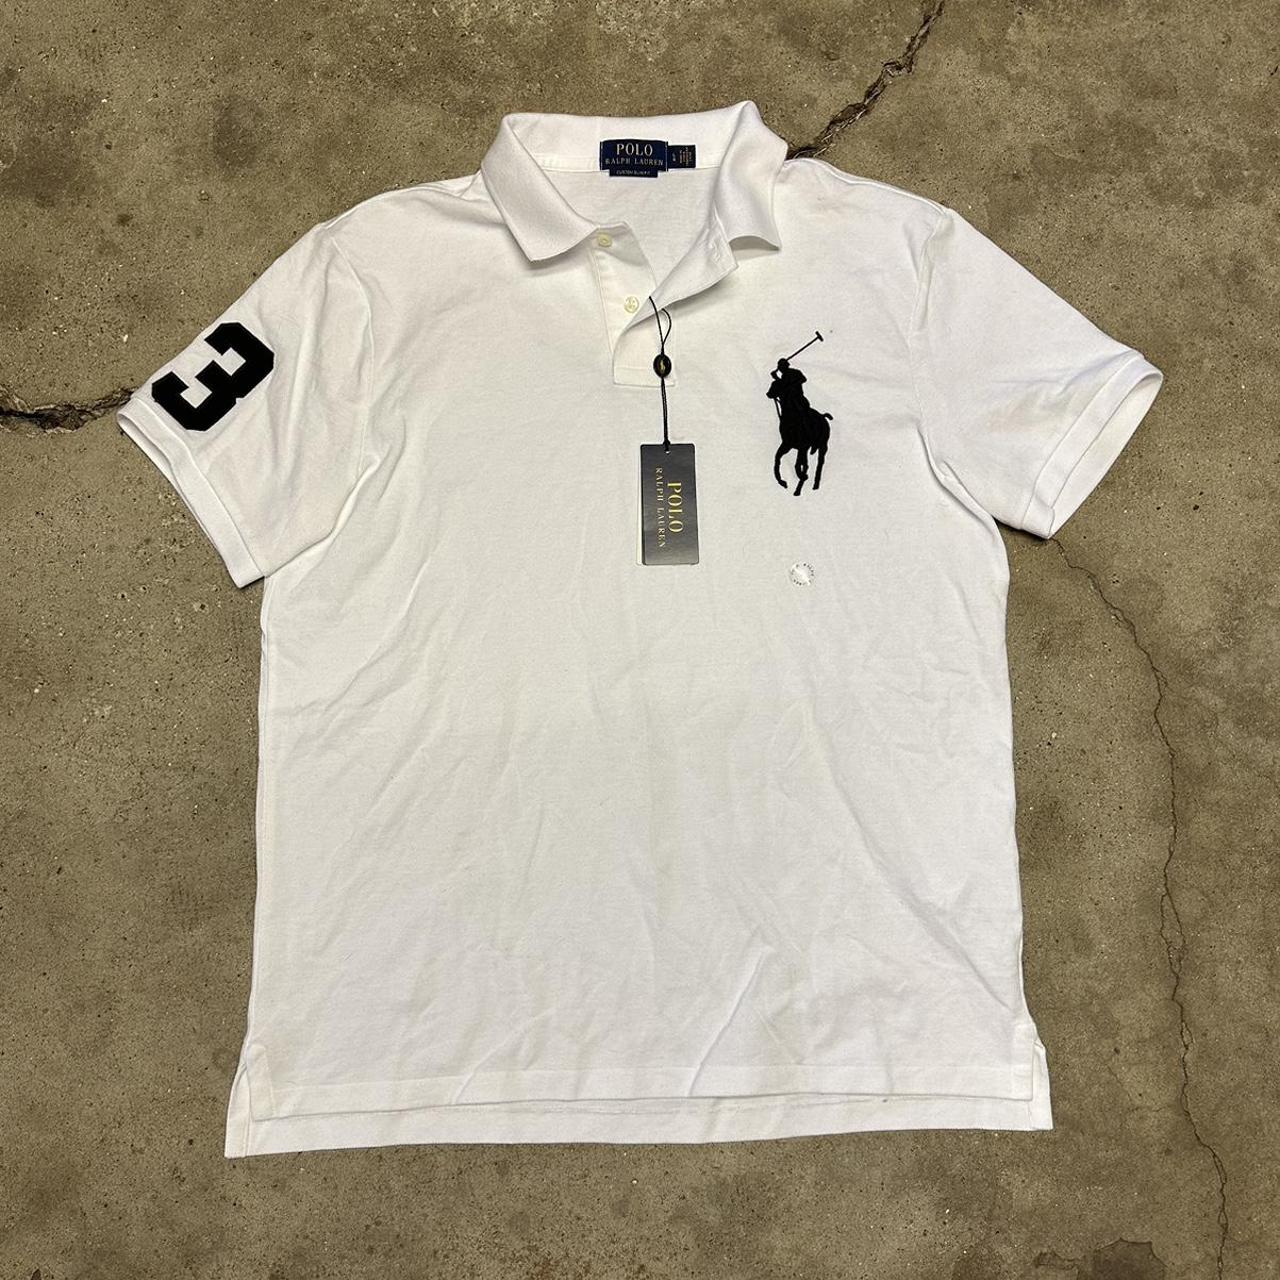 Polo Ralph Lauren Men's White and Black T-shirt | Depop